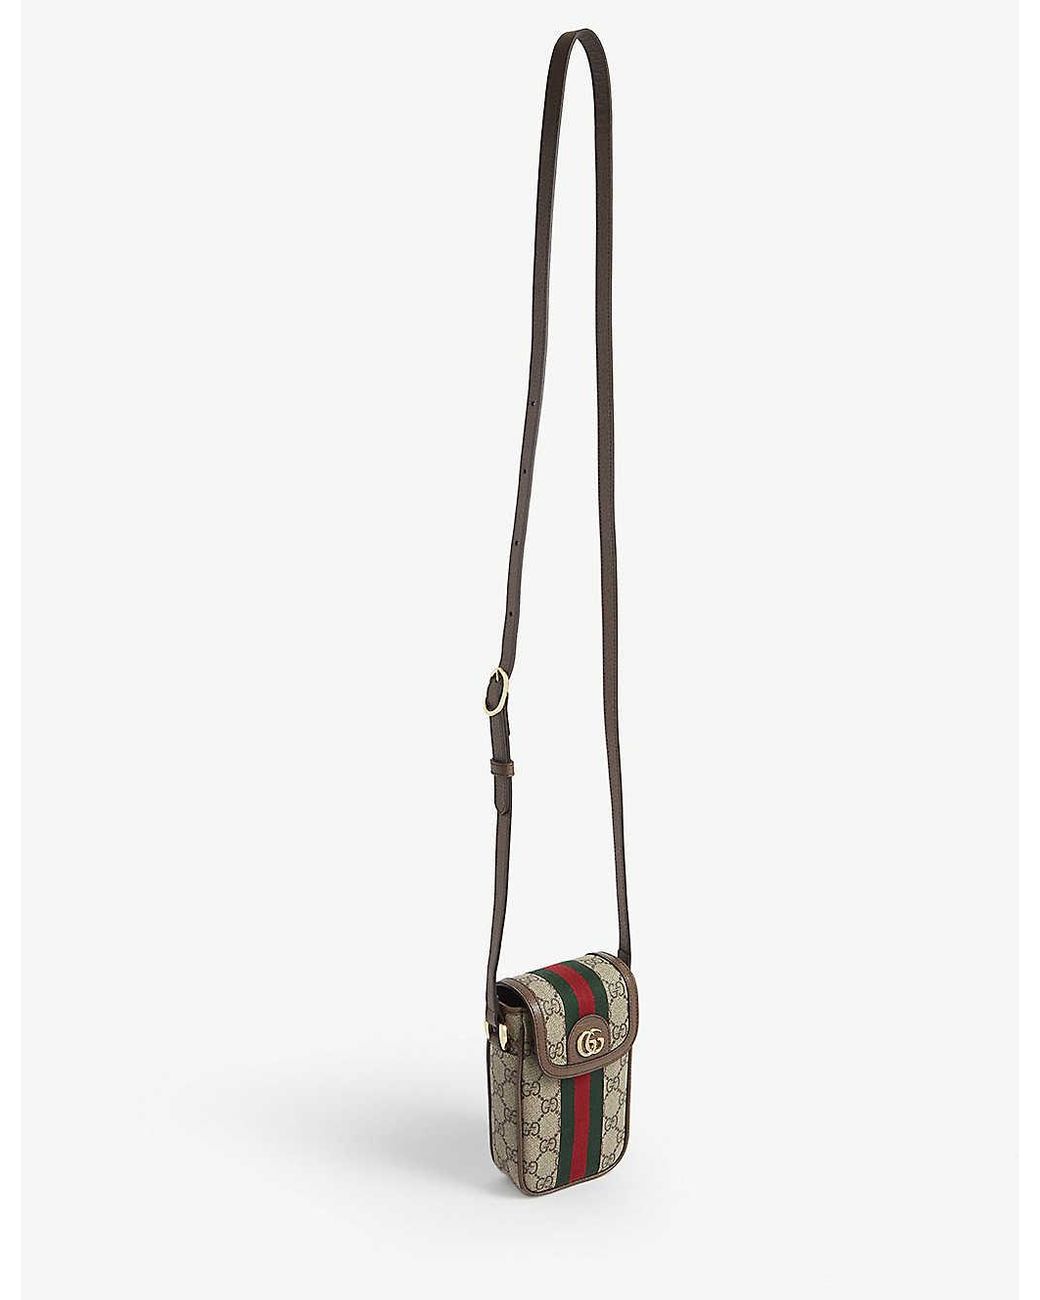 Gucci - Bags/Accessories - Mobile Drip